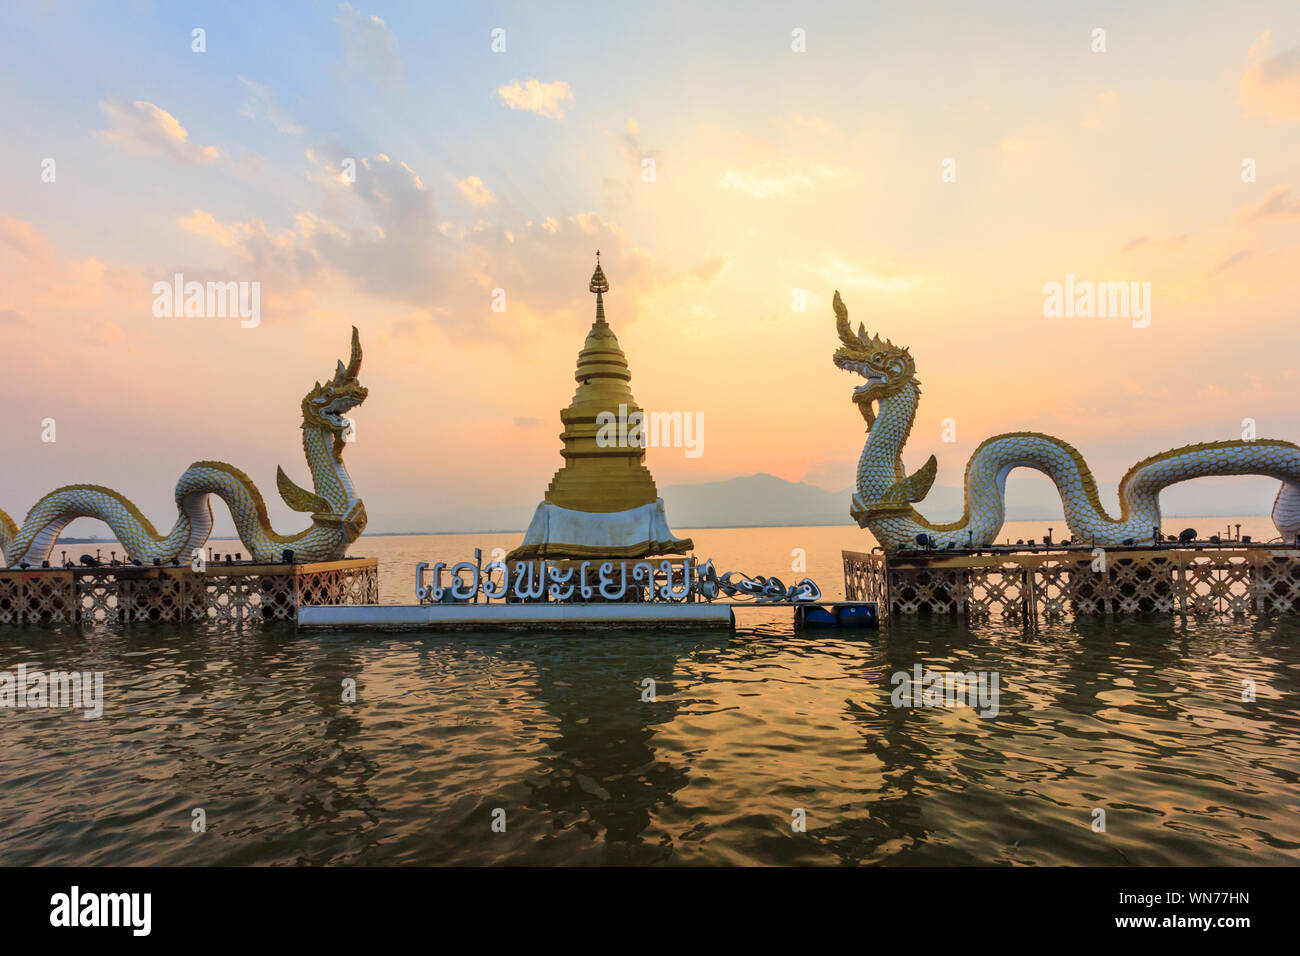 Sunset over Phayao lake. Thai text says 'Welcome to Phayao'. Thailand Stock Photo